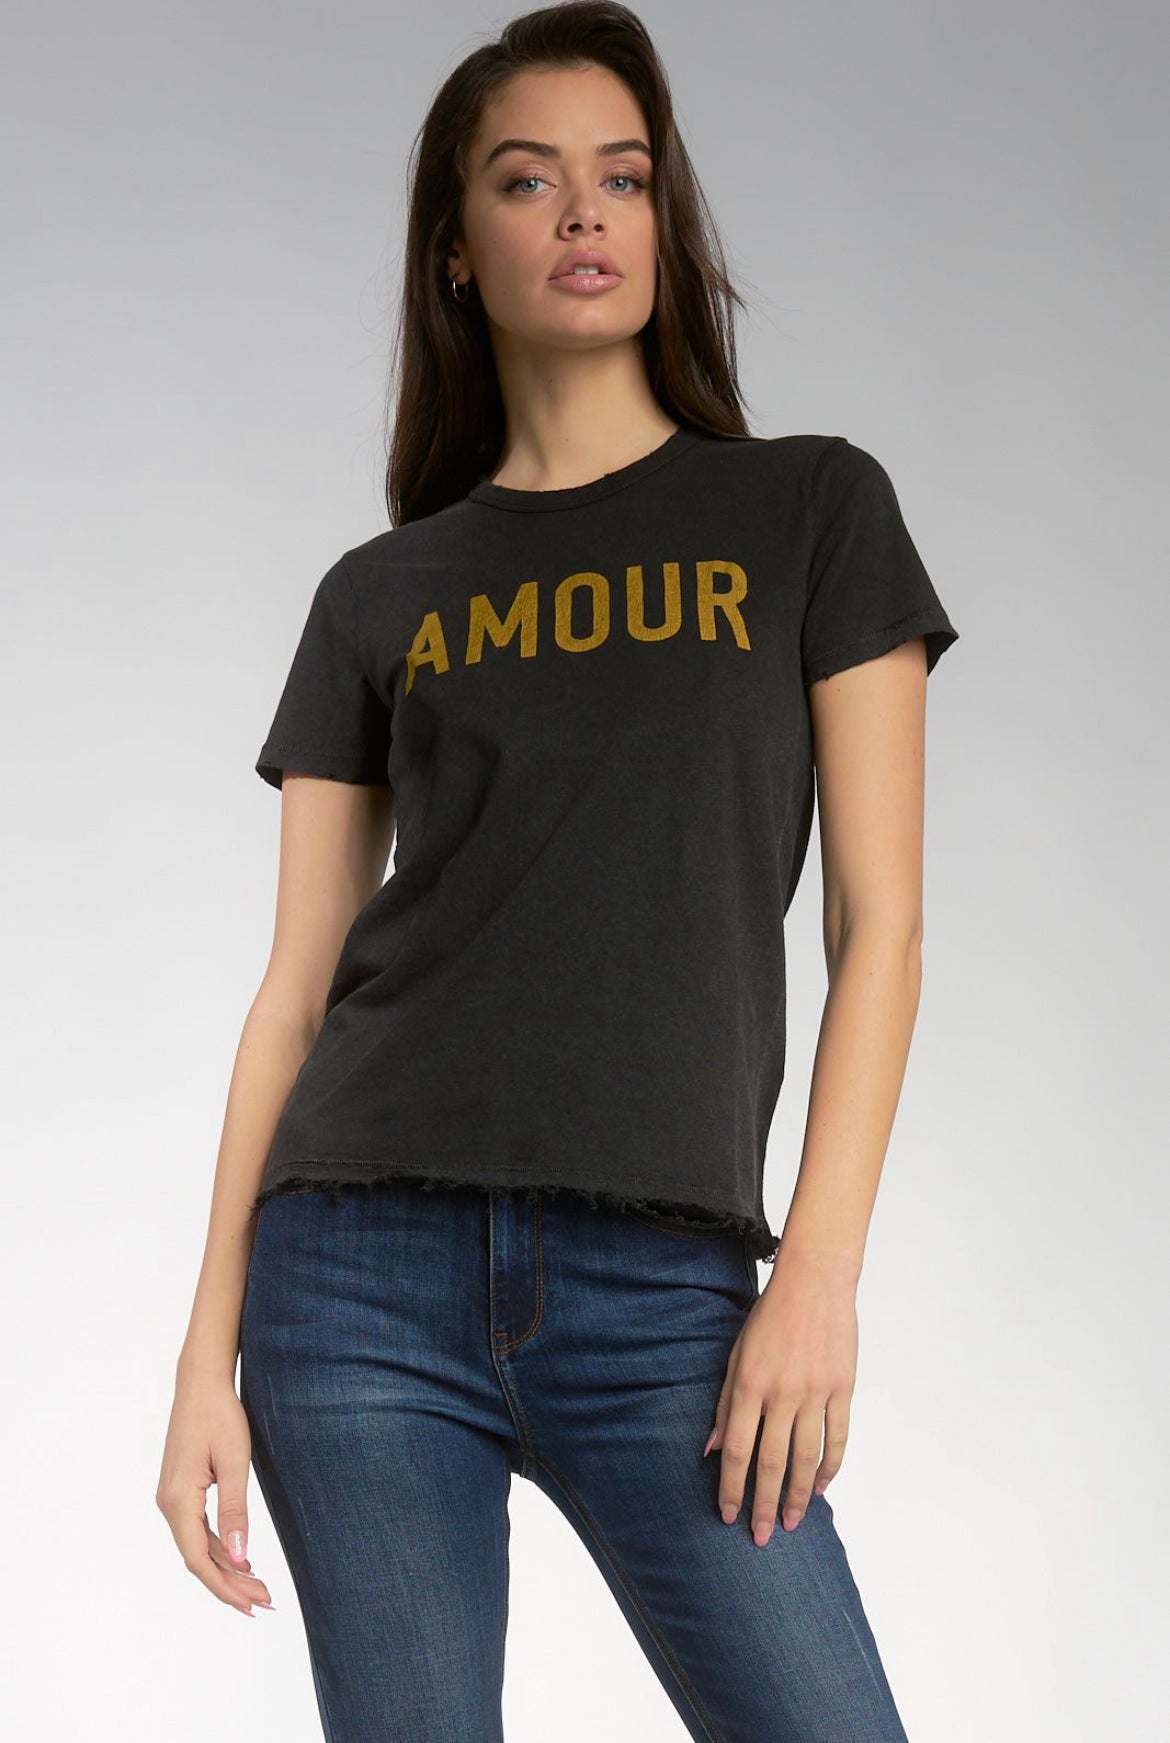 Amour Short Sleeve Tshirt